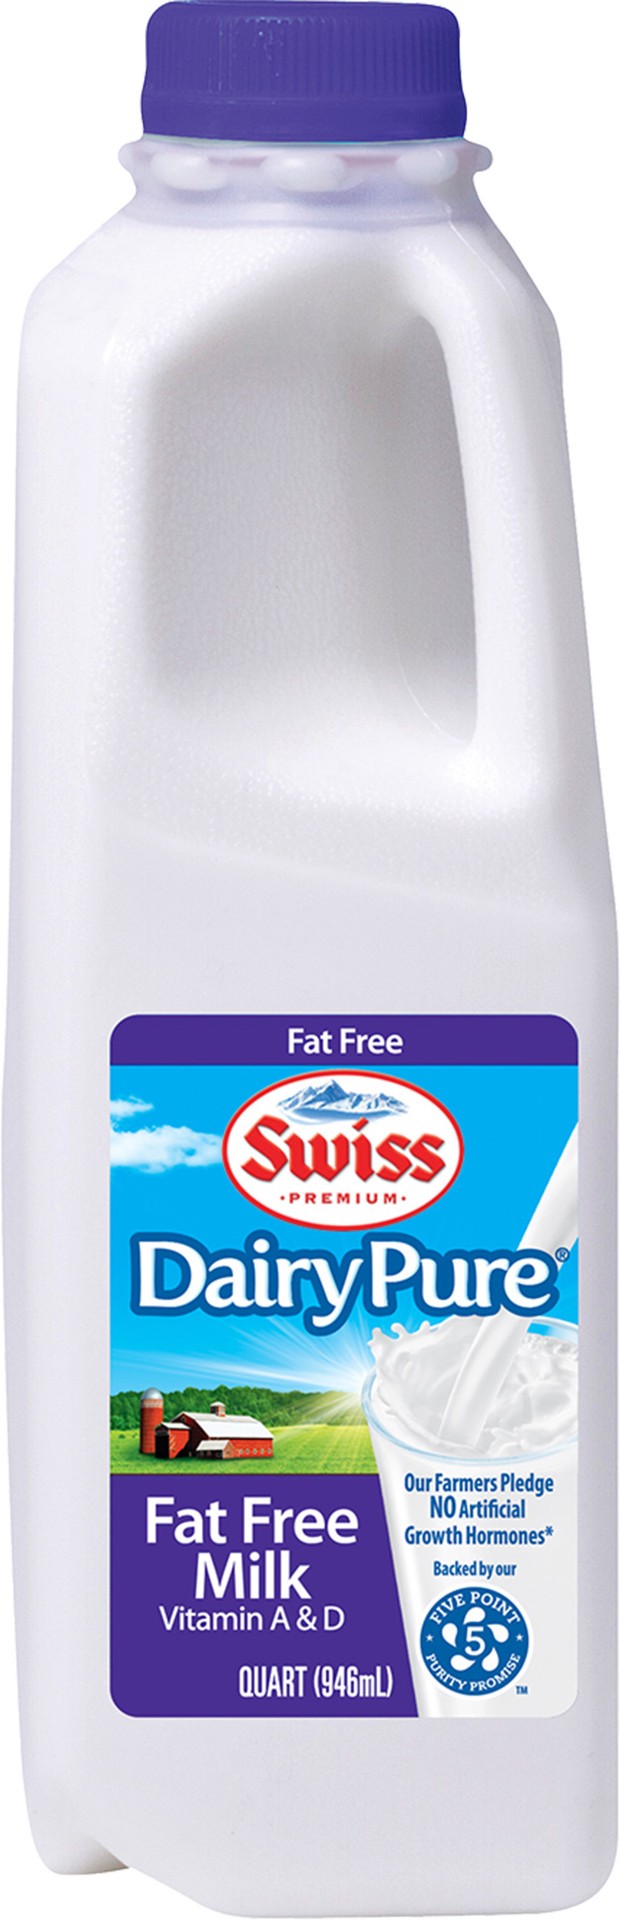 slide 1 of 3, Dairy Pure Dean's Dairy Pure Fat Free Milk Single, 1 qt